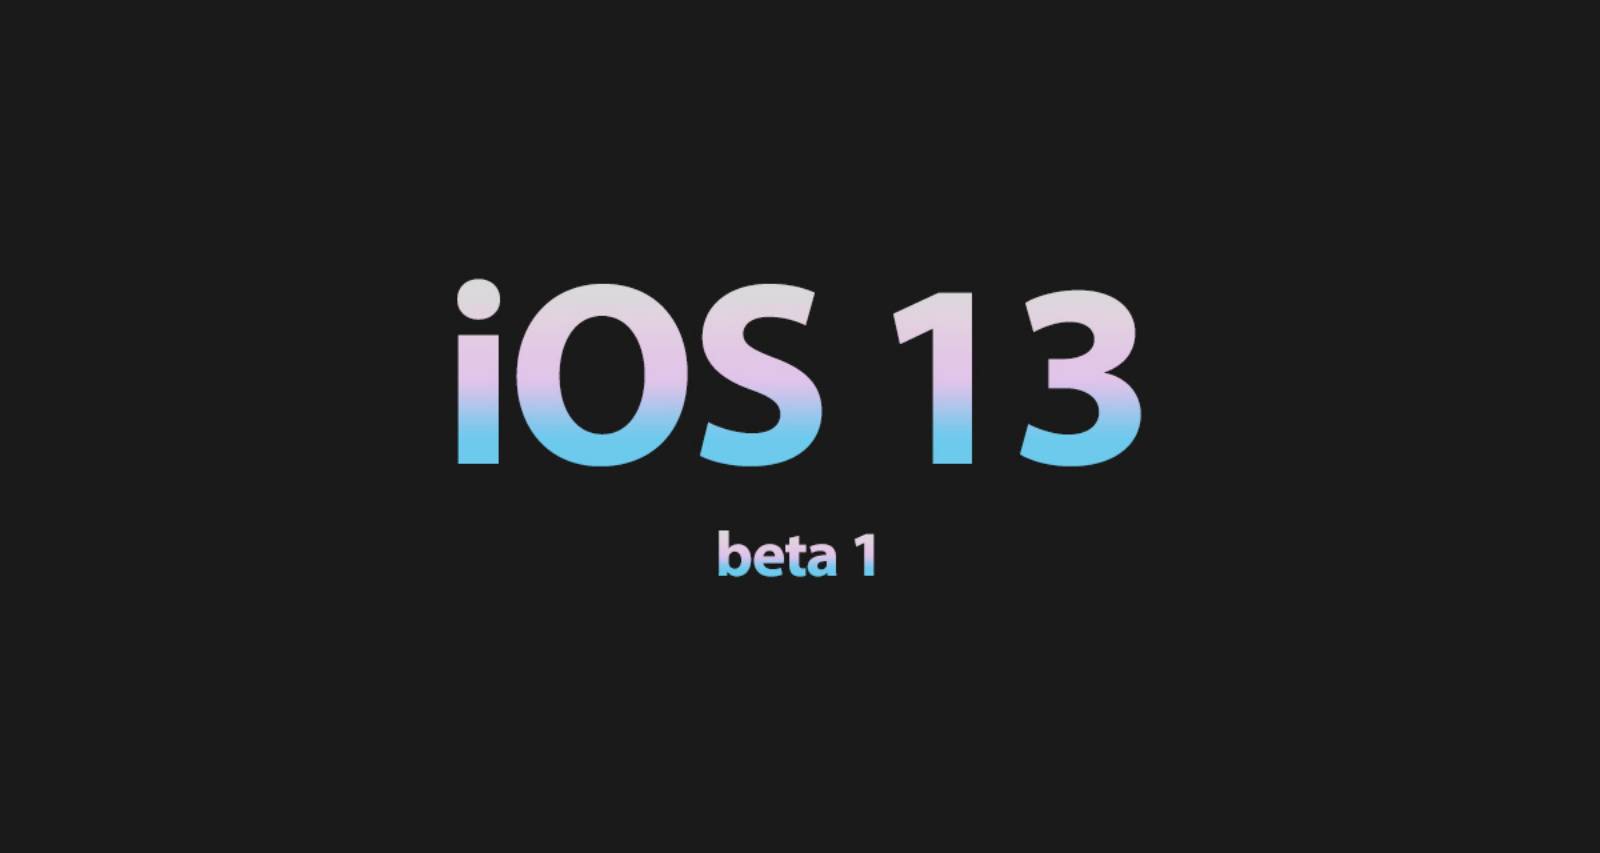 iOS 13 beta 1